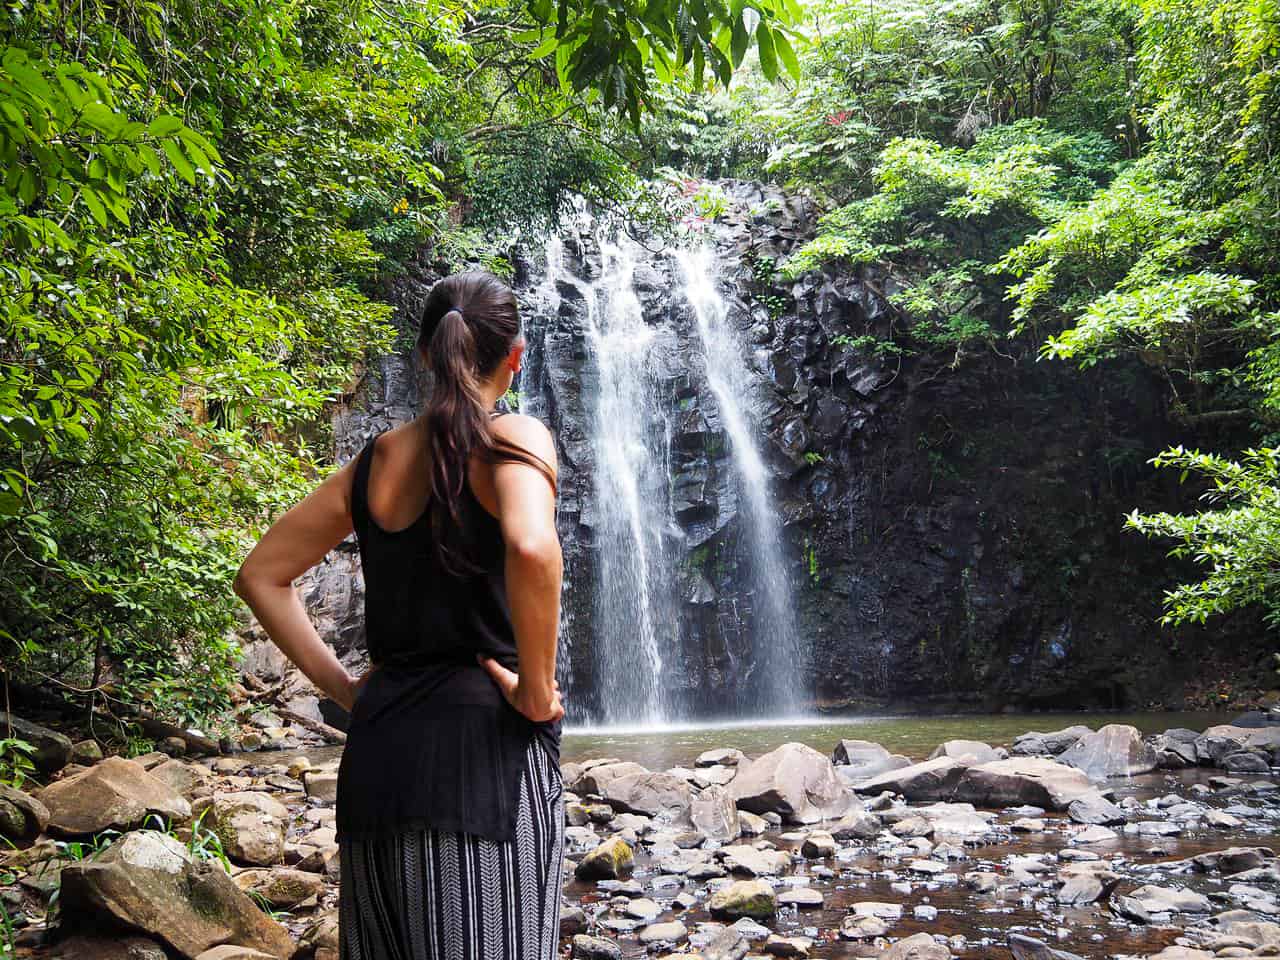 Ellinjaa Falls along the waterfall circuit near Cairns, North Queensland, Australia // travelmermaid.com